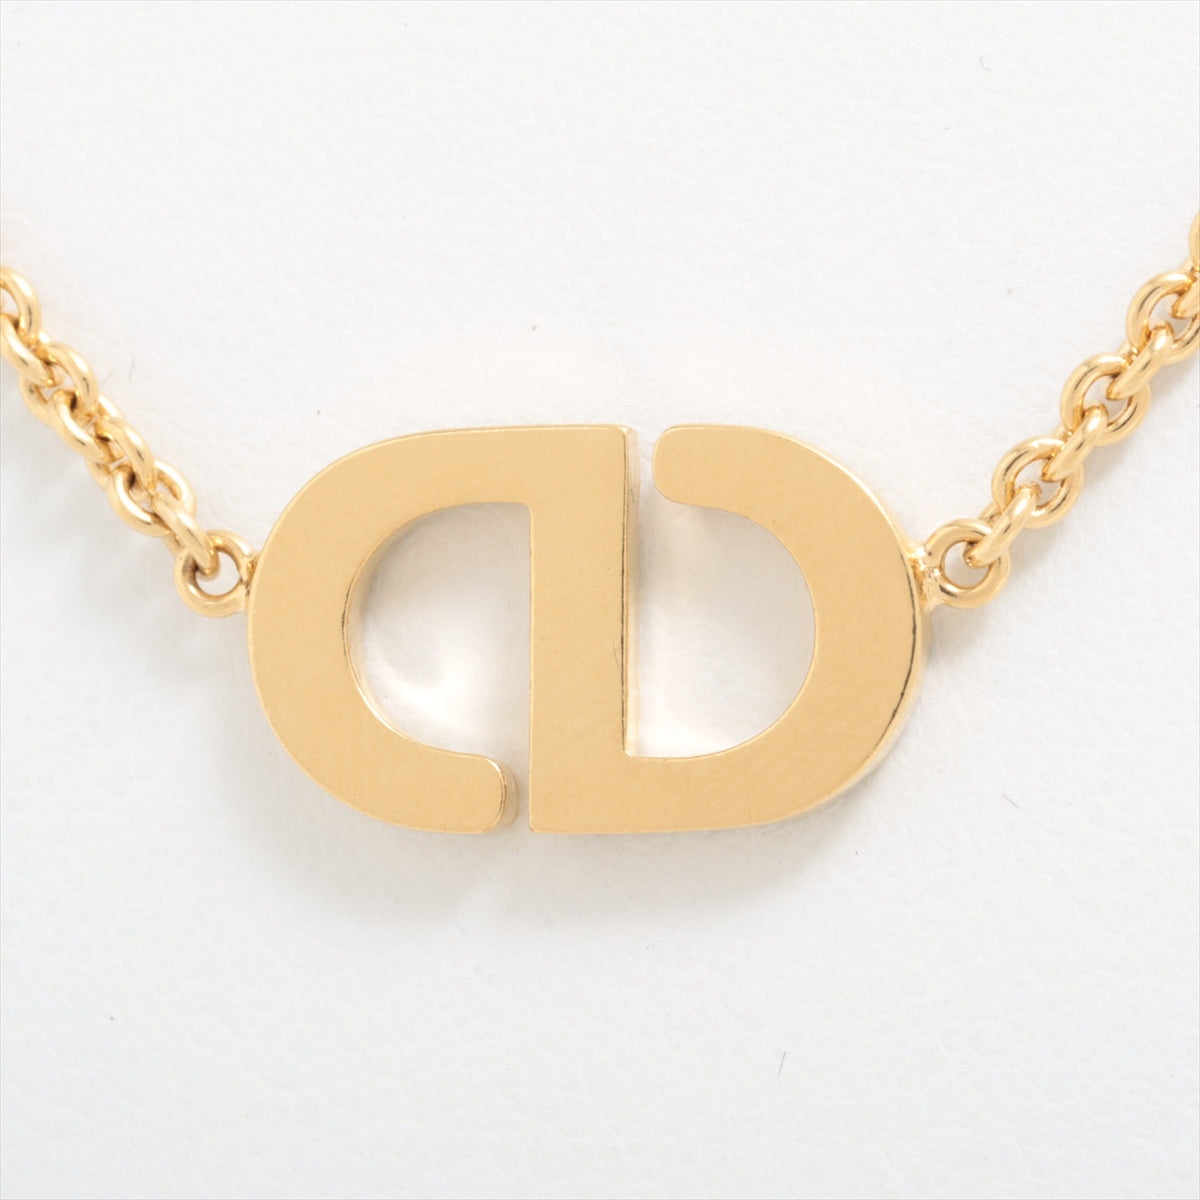 Dior Petit CD Necklace Gold-Finish Metal | eBay